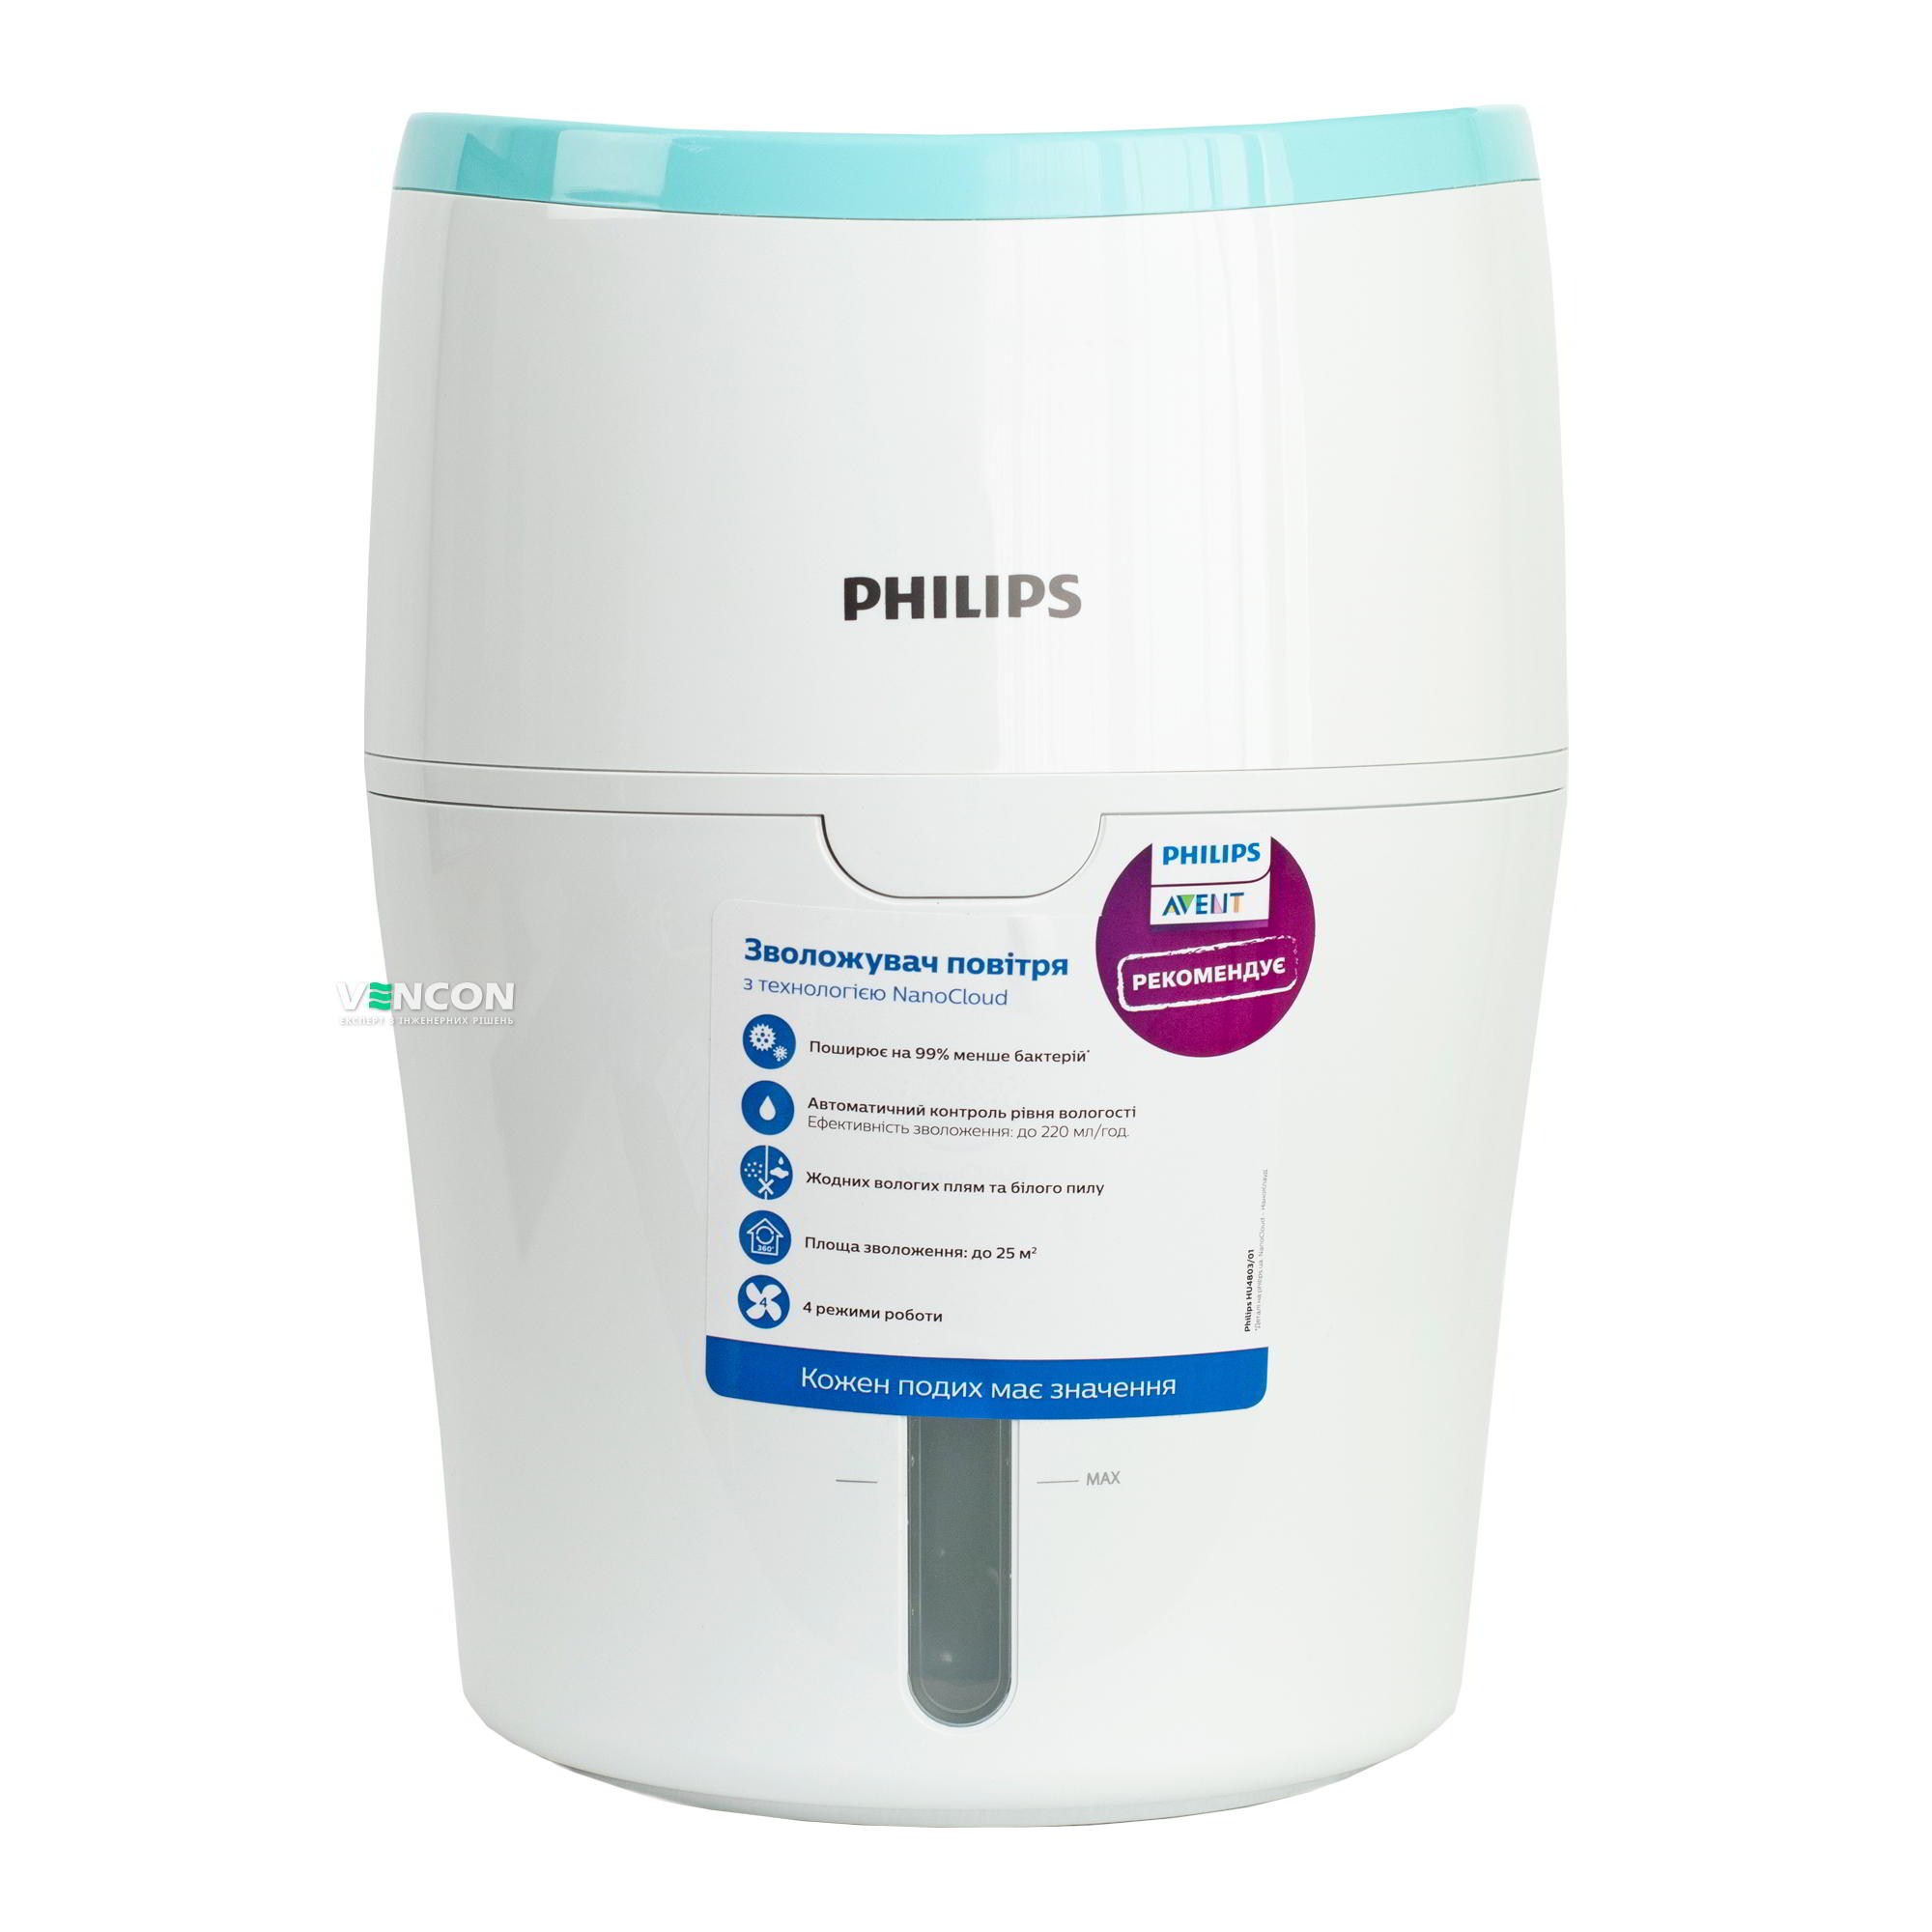 Характеристики зволожувач philips з датчиком вологості Philips HU4801/01